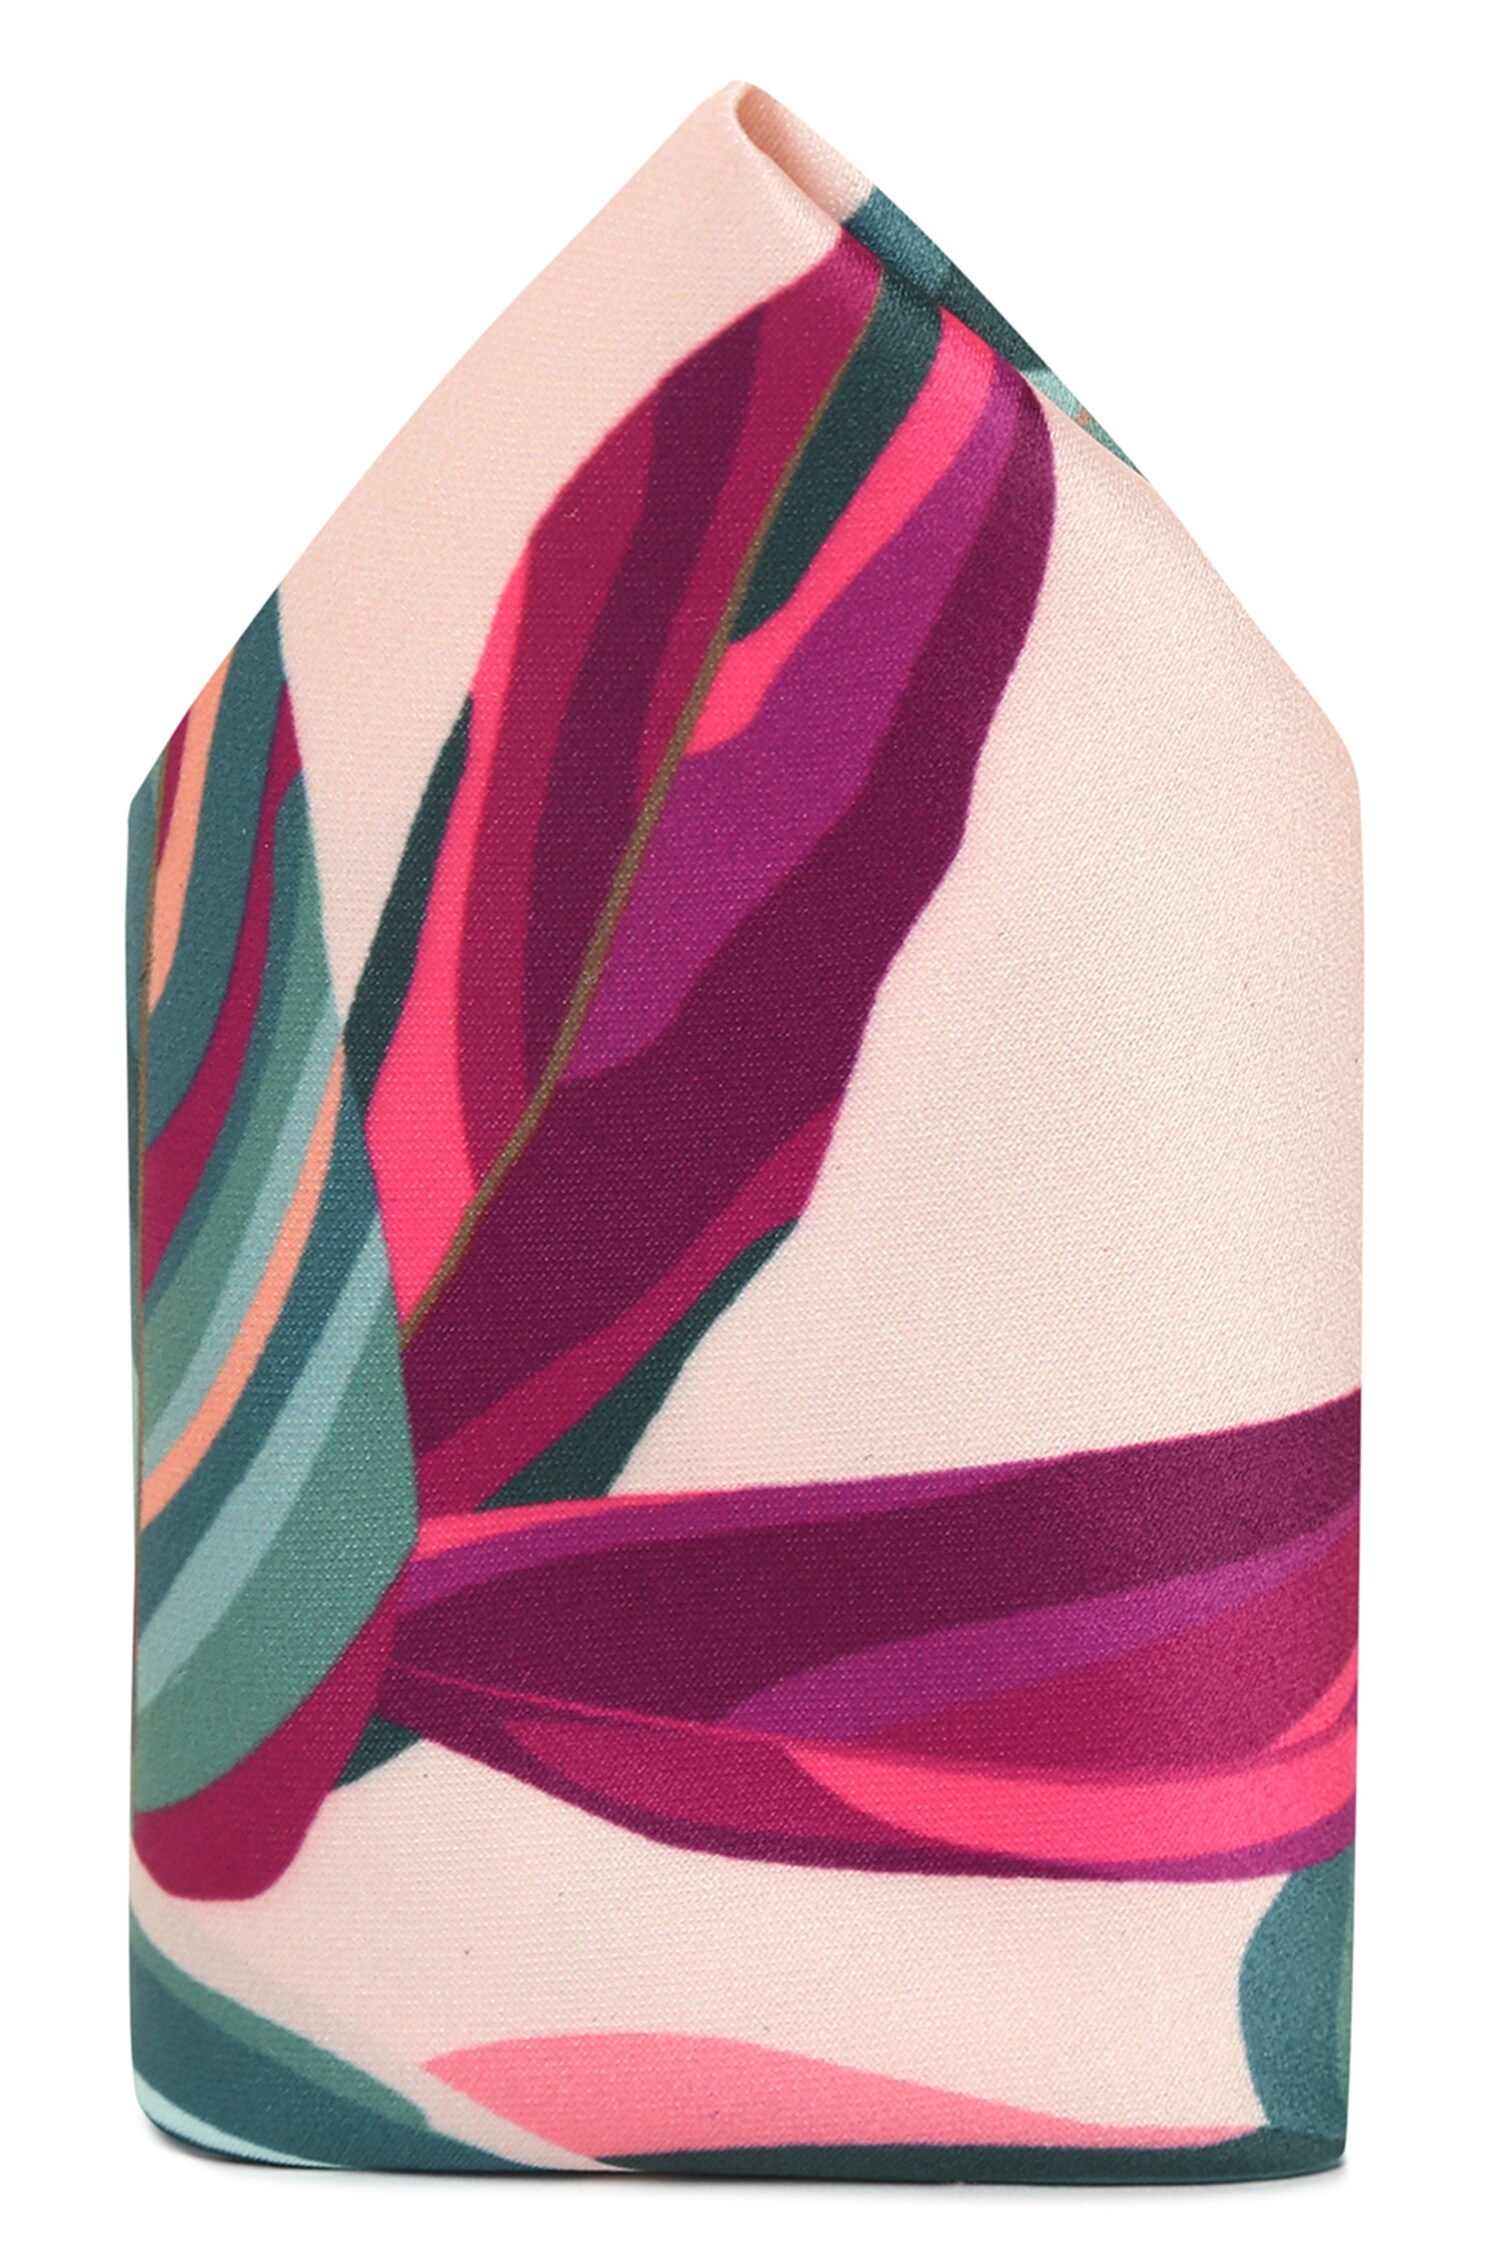 Tossido Multi Color Printed Leaf Pattern Pocket Square